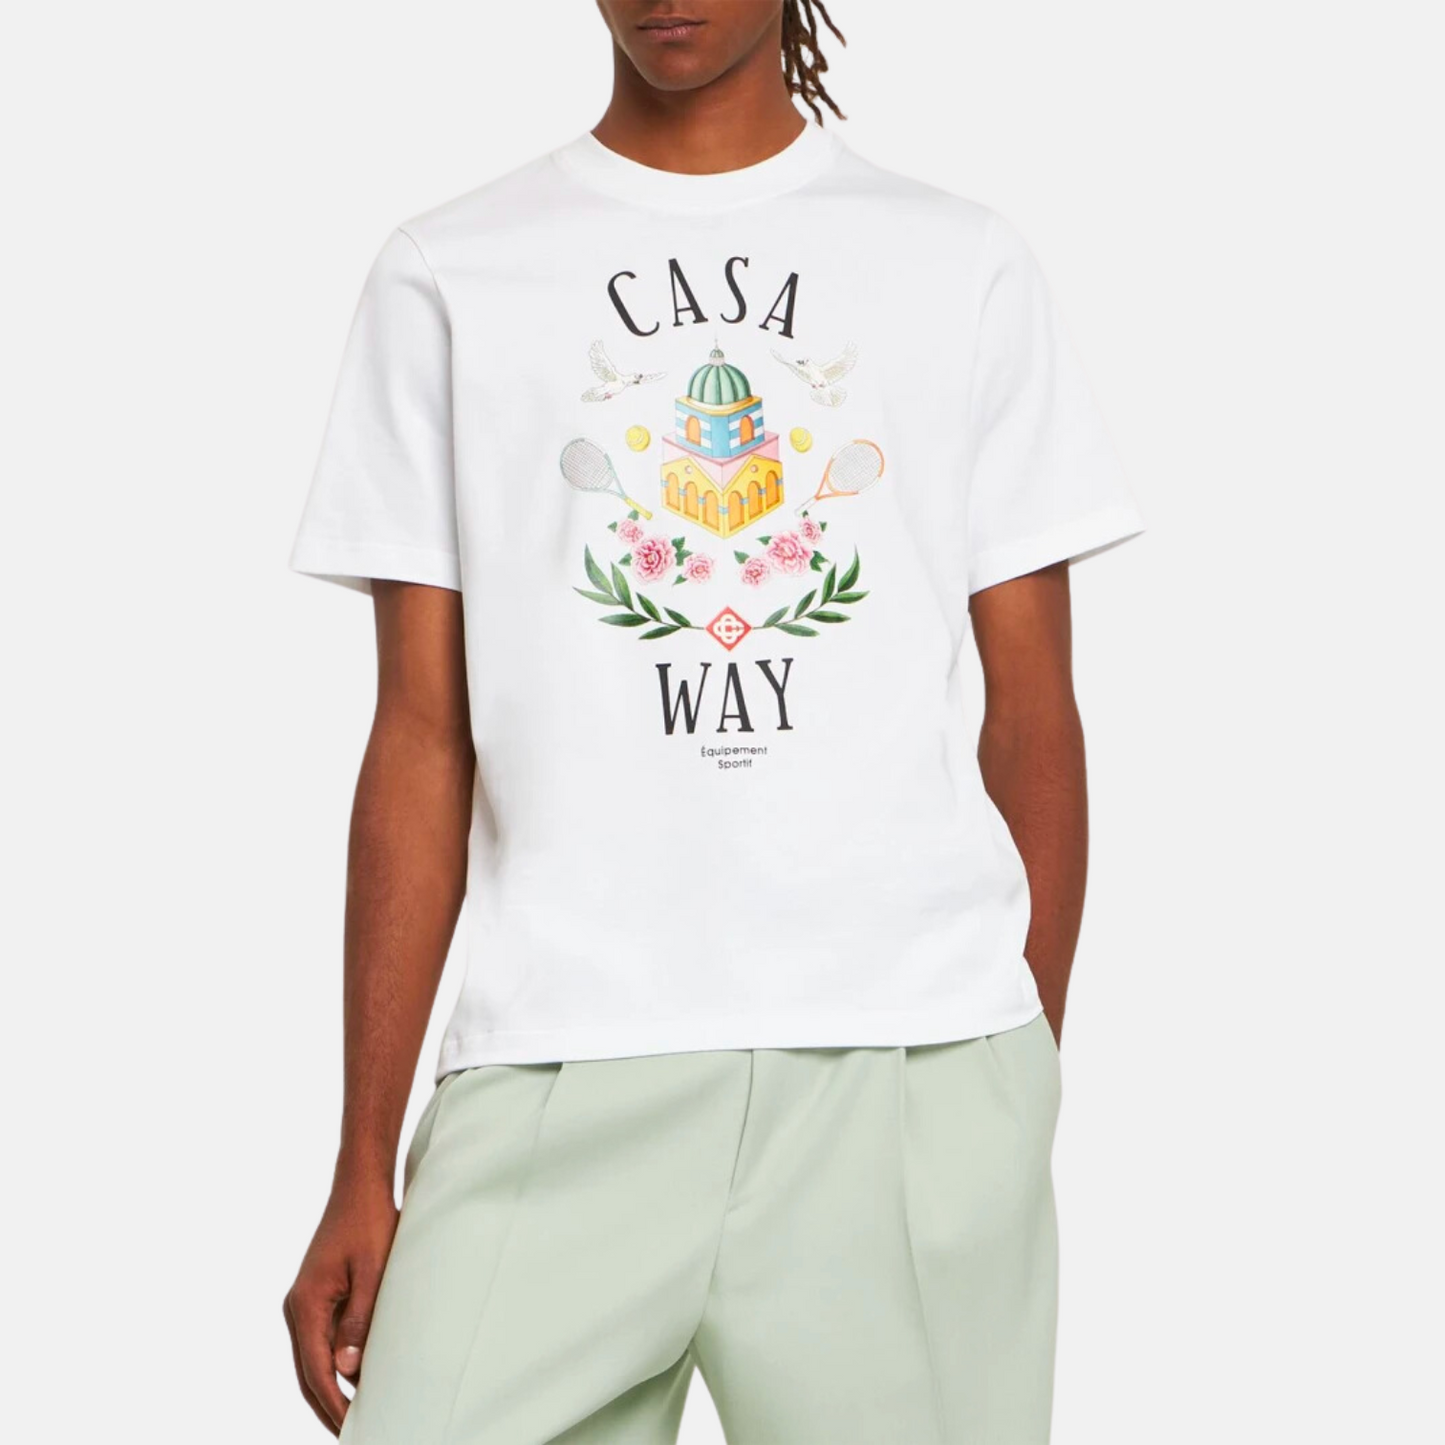 Casablanca Casa Way T-shirt